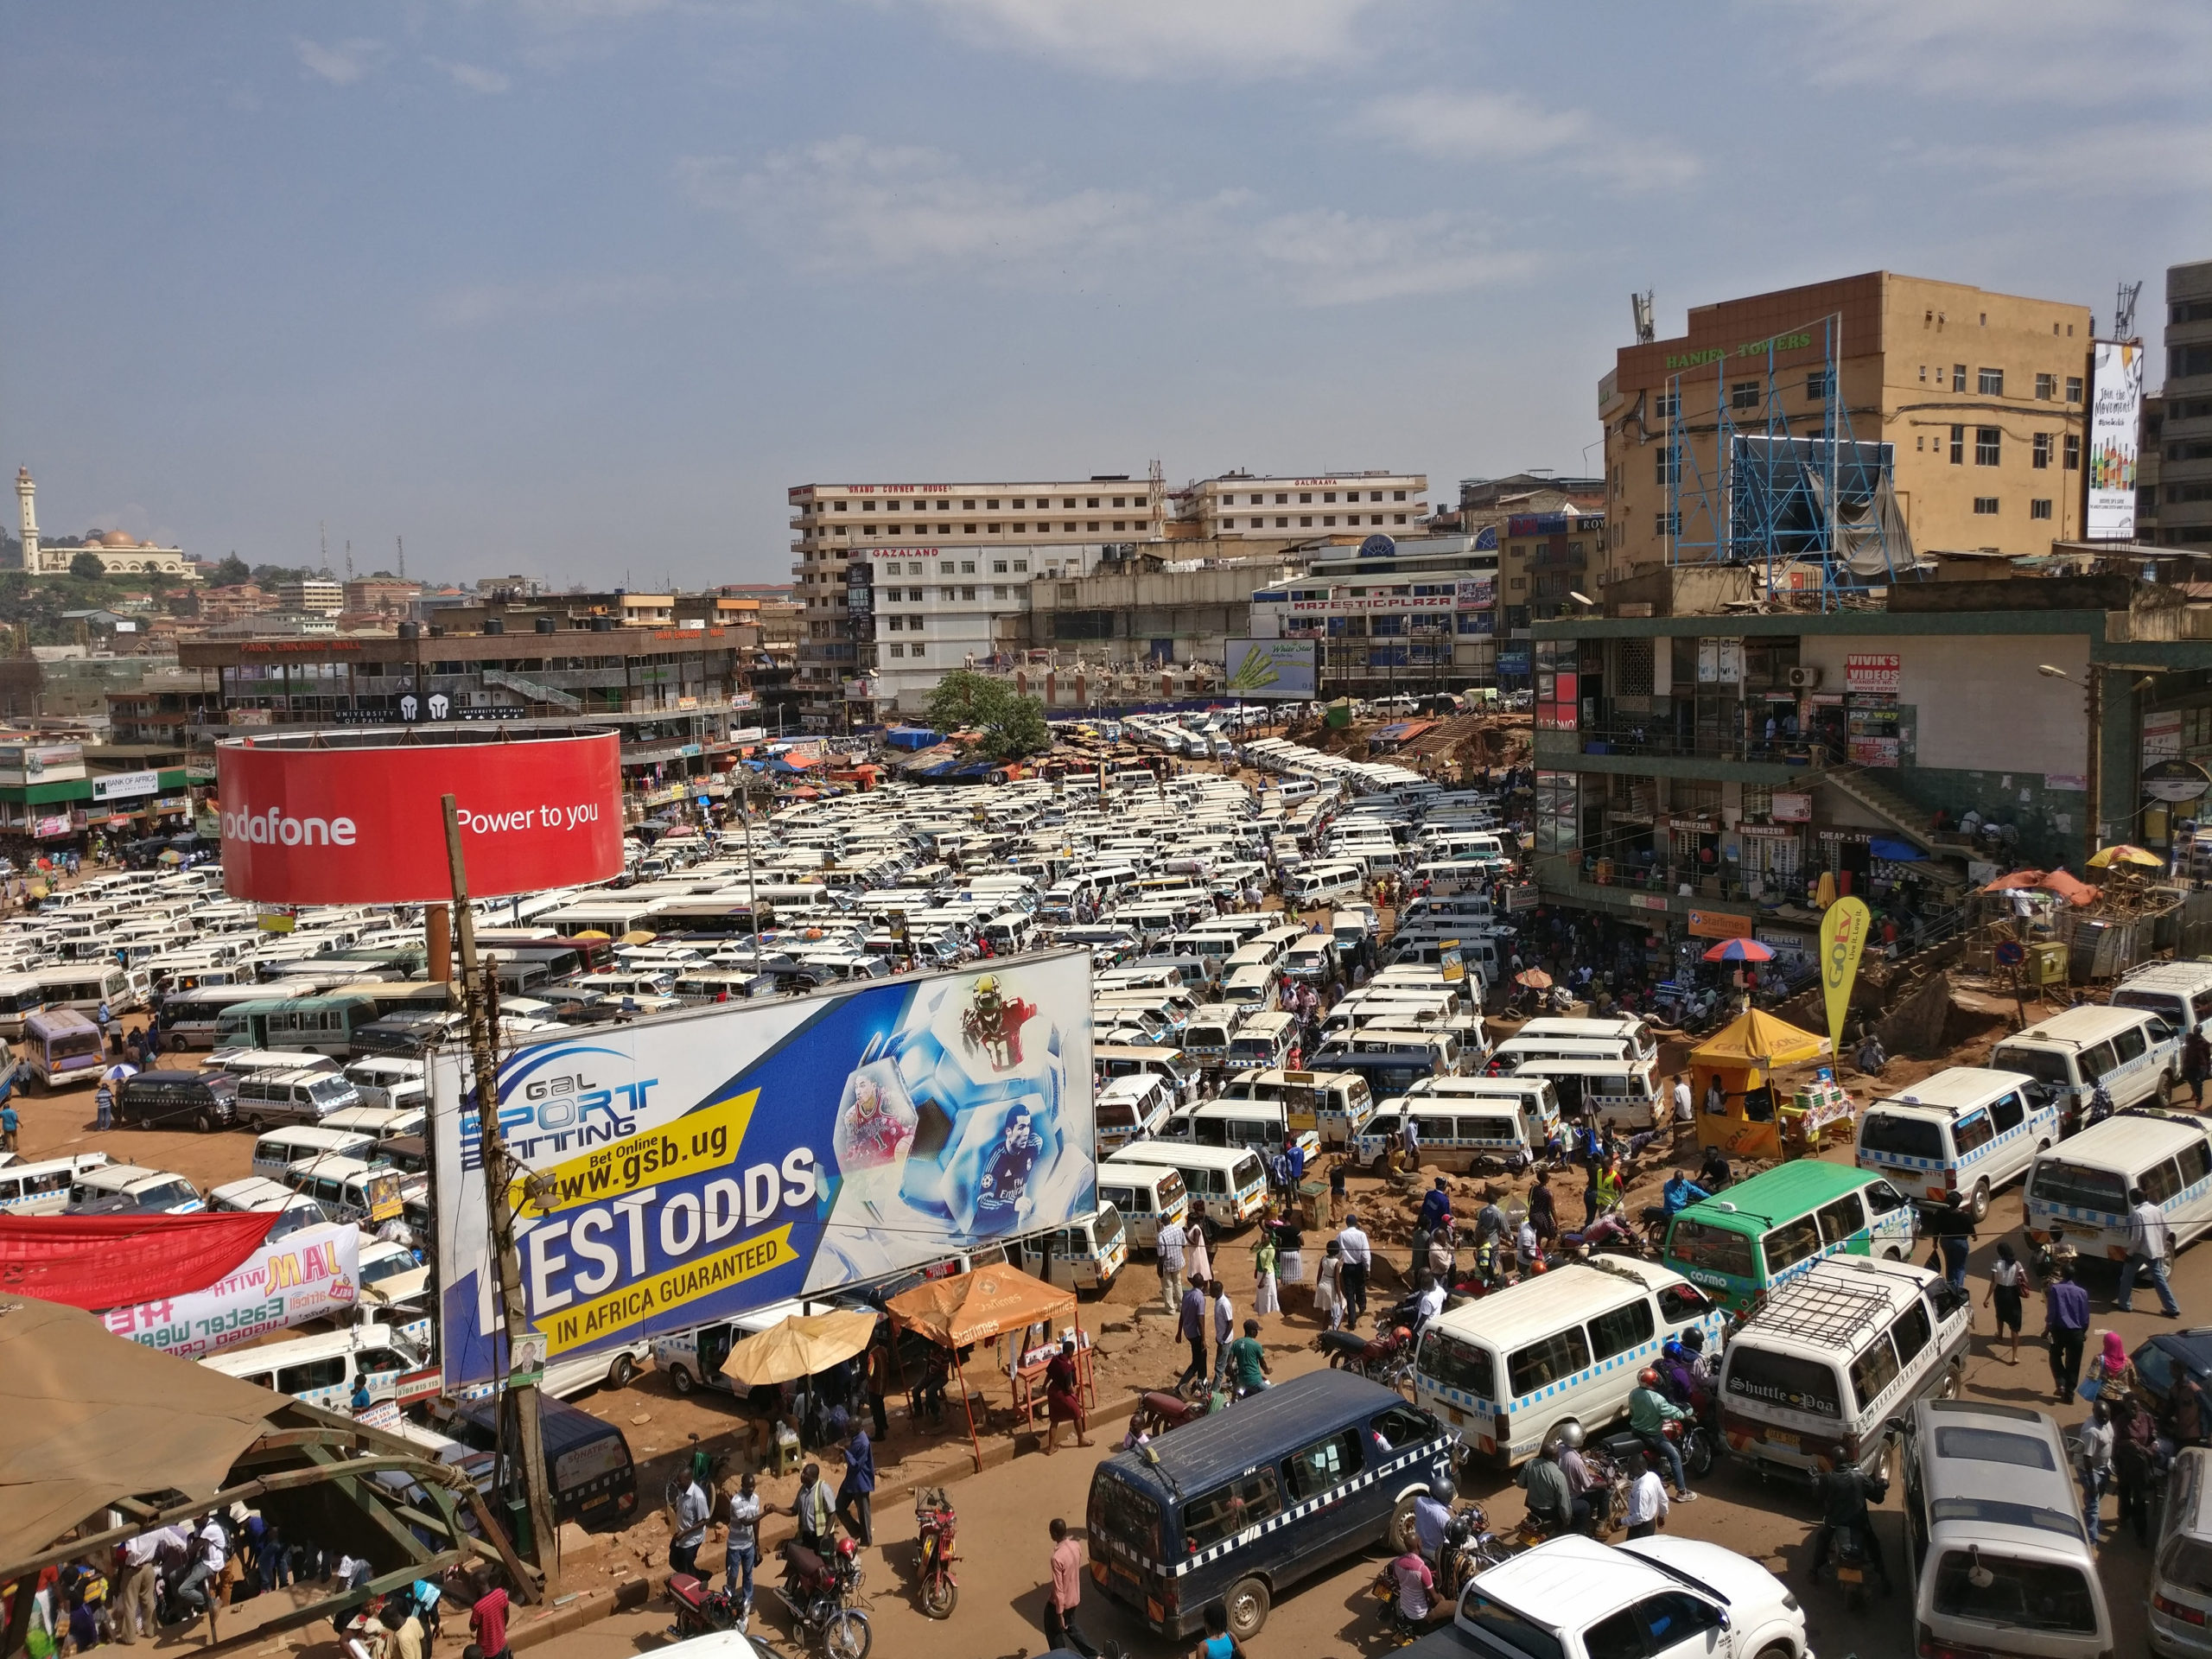 Minibus parking lot in Kampala